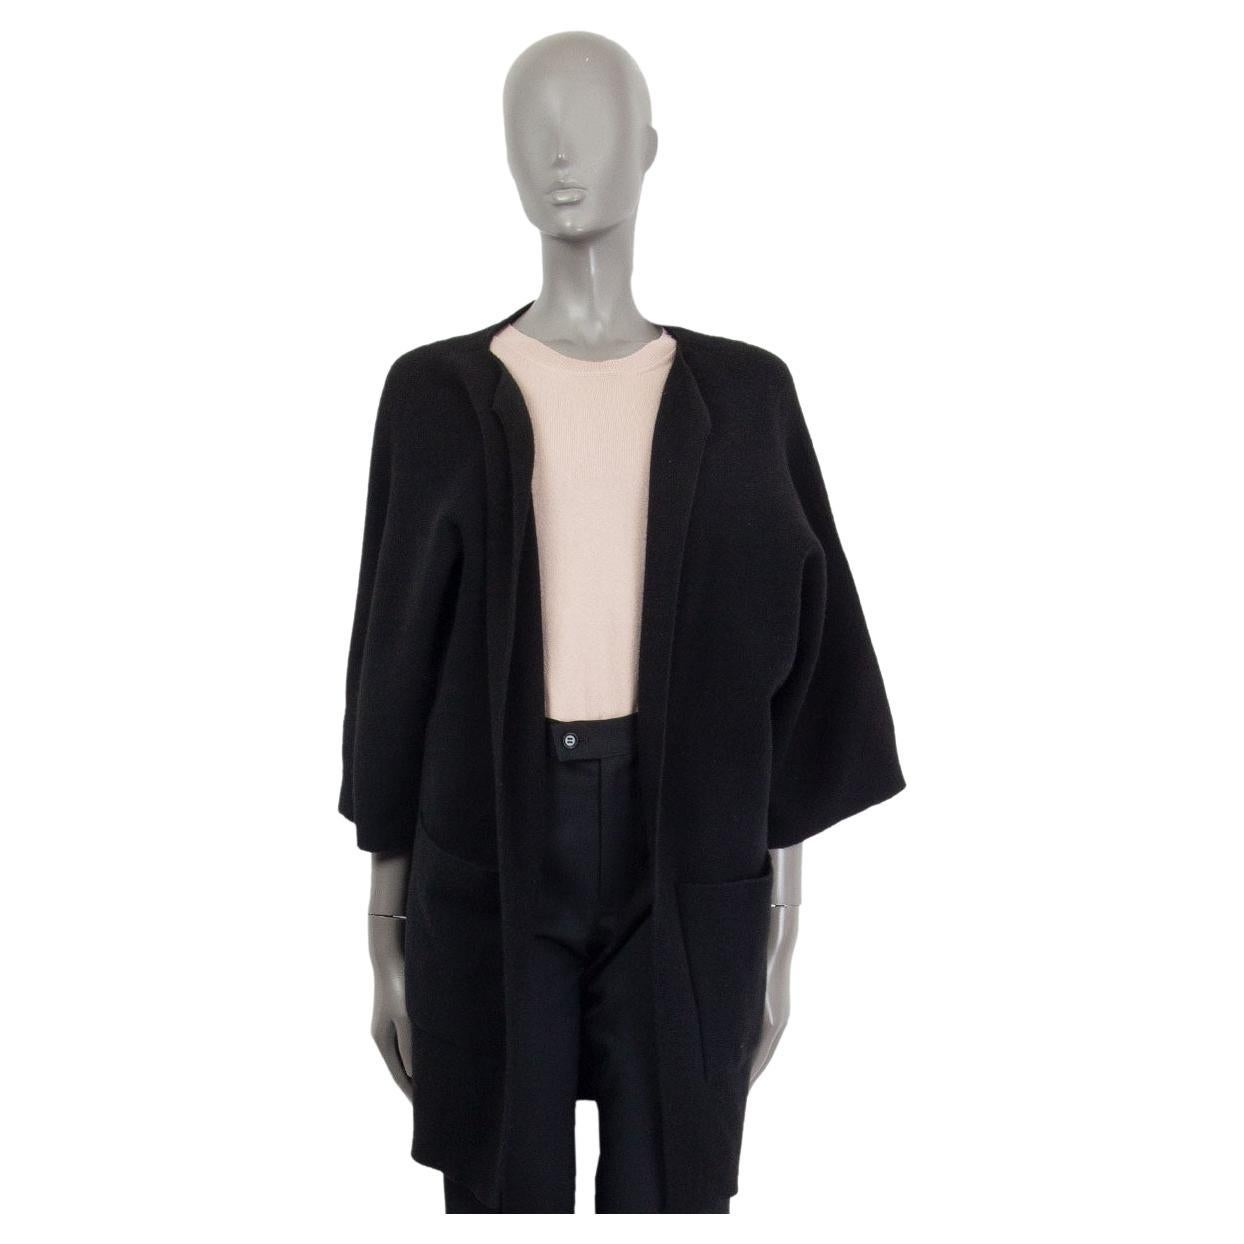 JIL SANDER black cashmere OVERSIZED OPEN SHORT SLEEVE Cardigan Sweater 36 S